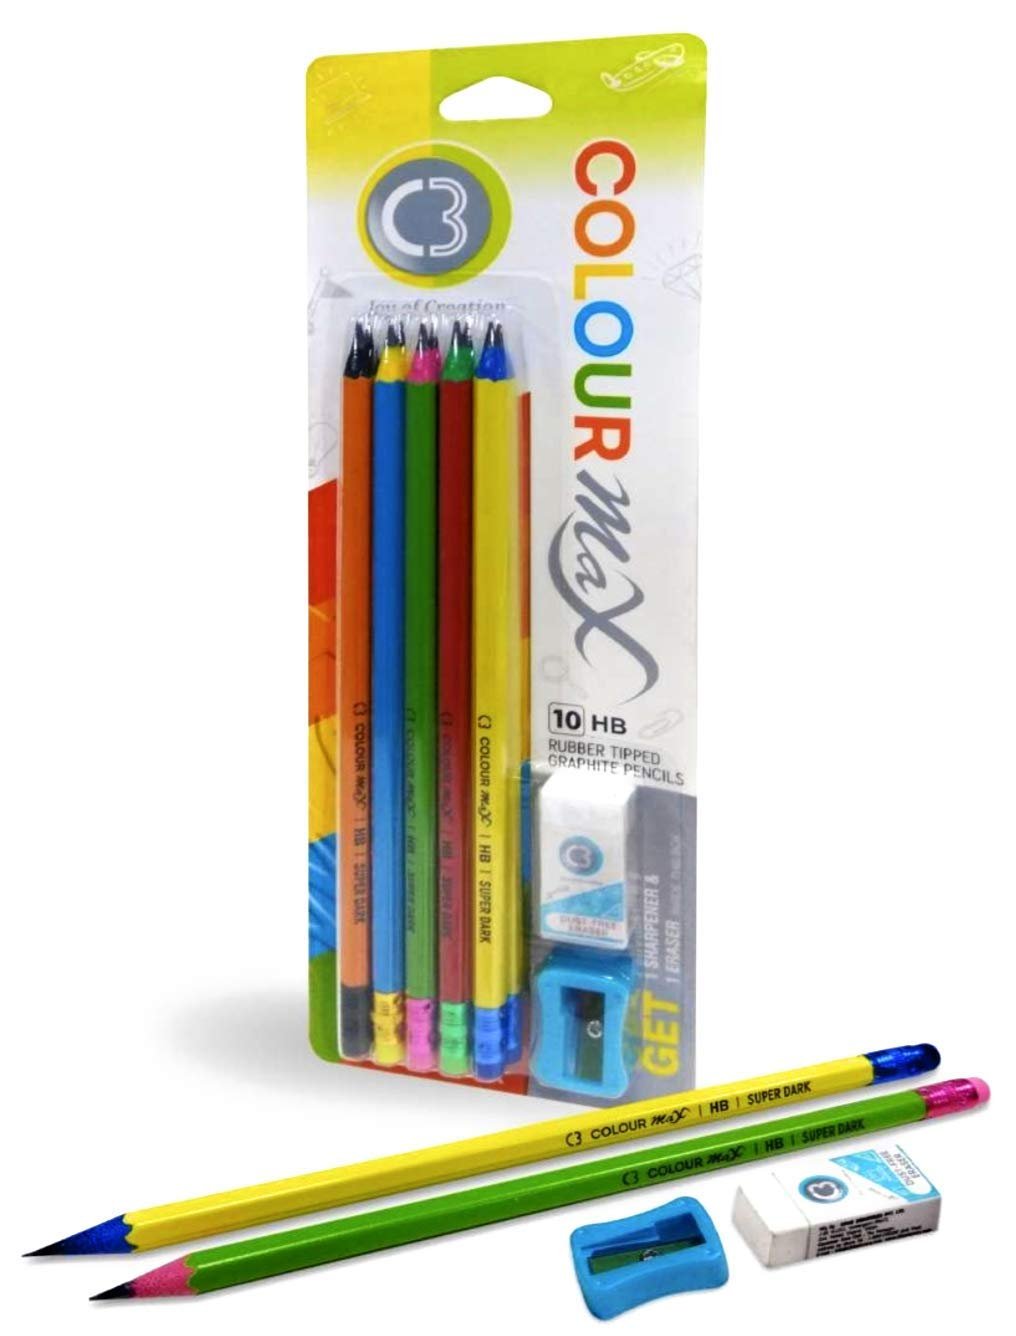 C3 Colour Max 10HB RUbber Tipped Graphite Pencils - 10 Pencils